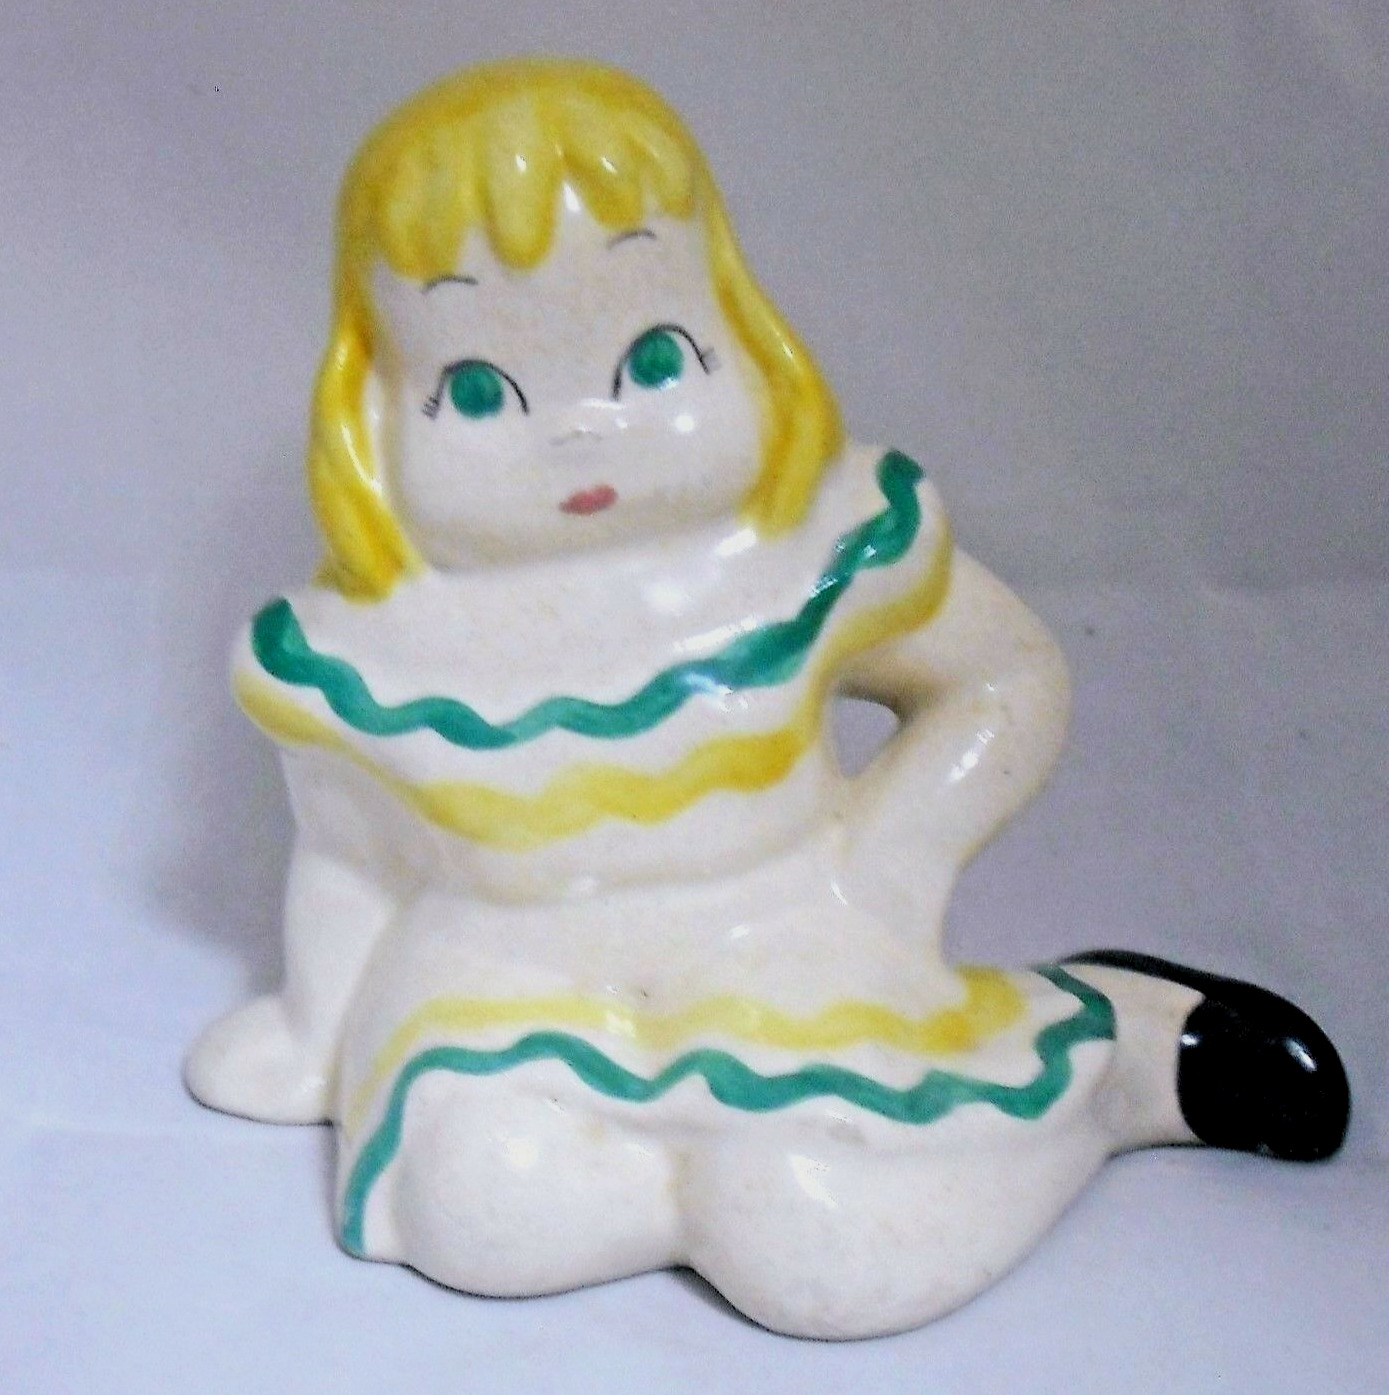 Vintage Ceramic Doll Figurine Handmade Yellow Hair Green Eyes